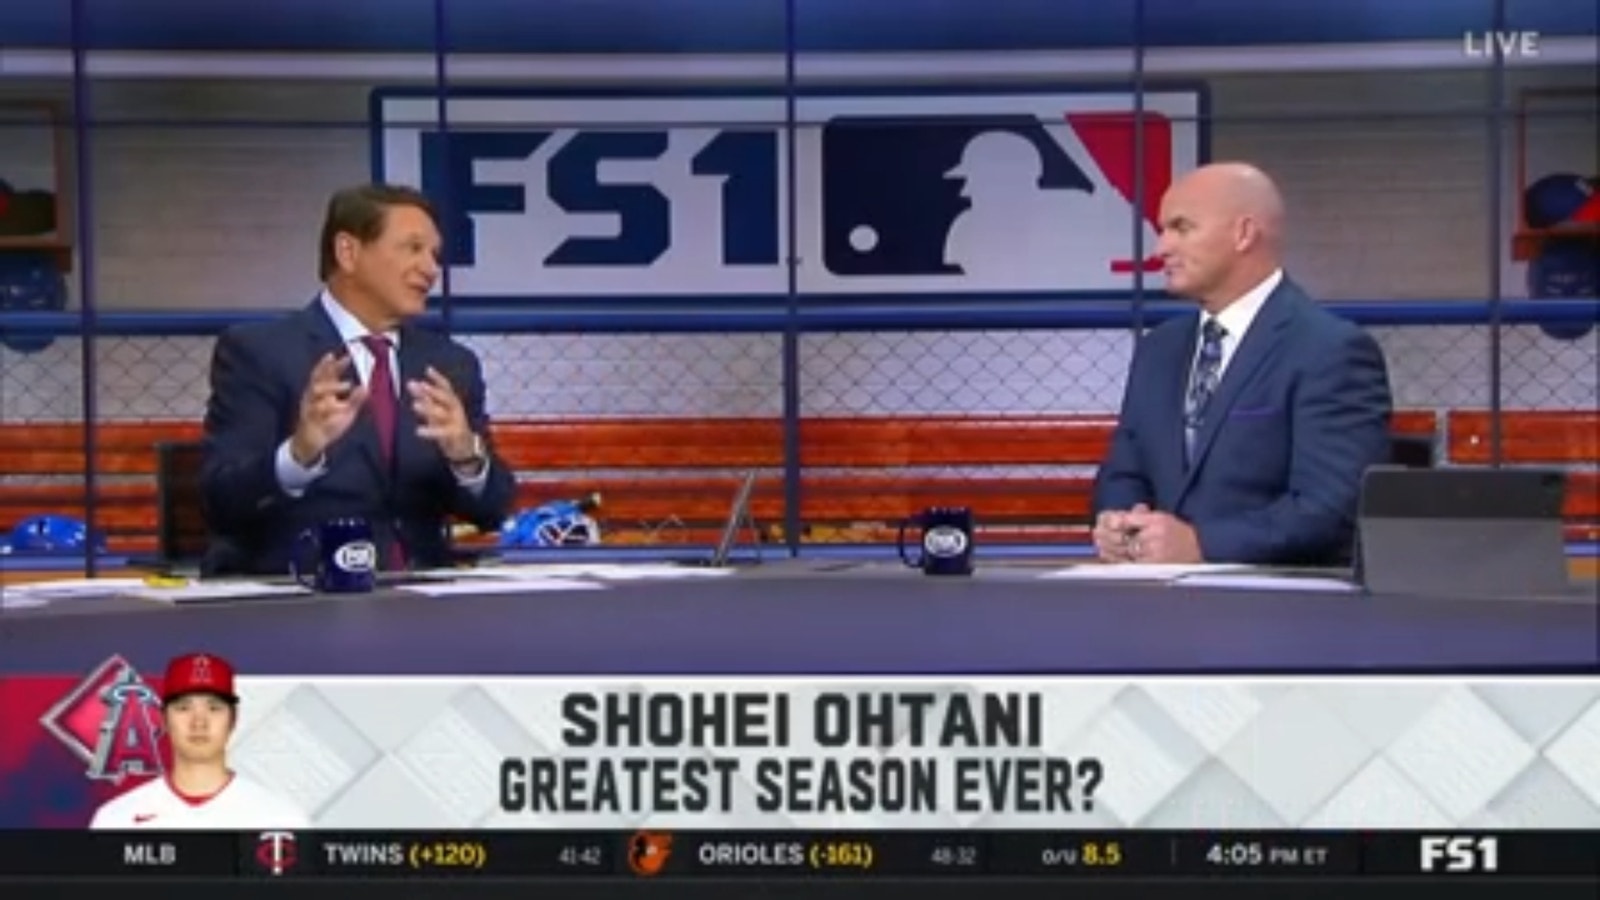 Is Shohei Ohtani having the greatest season of all time?